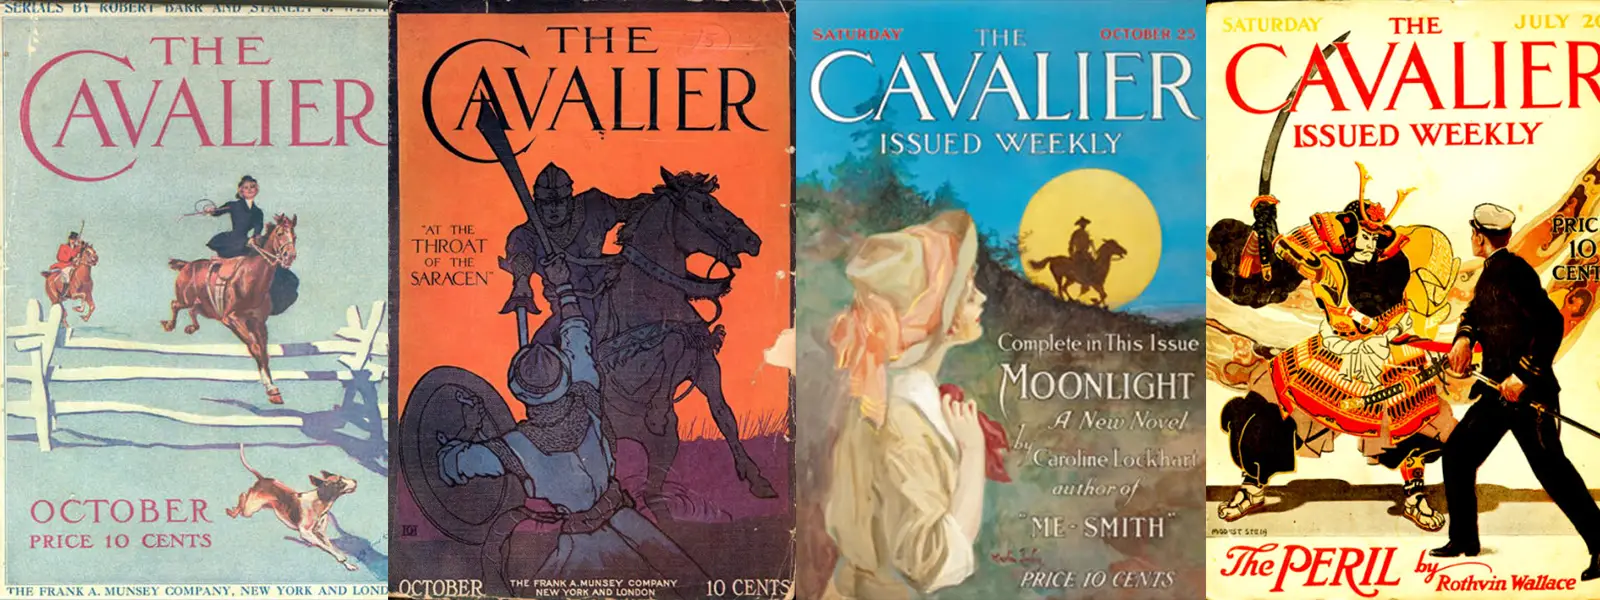 the cavalier magazine banner art